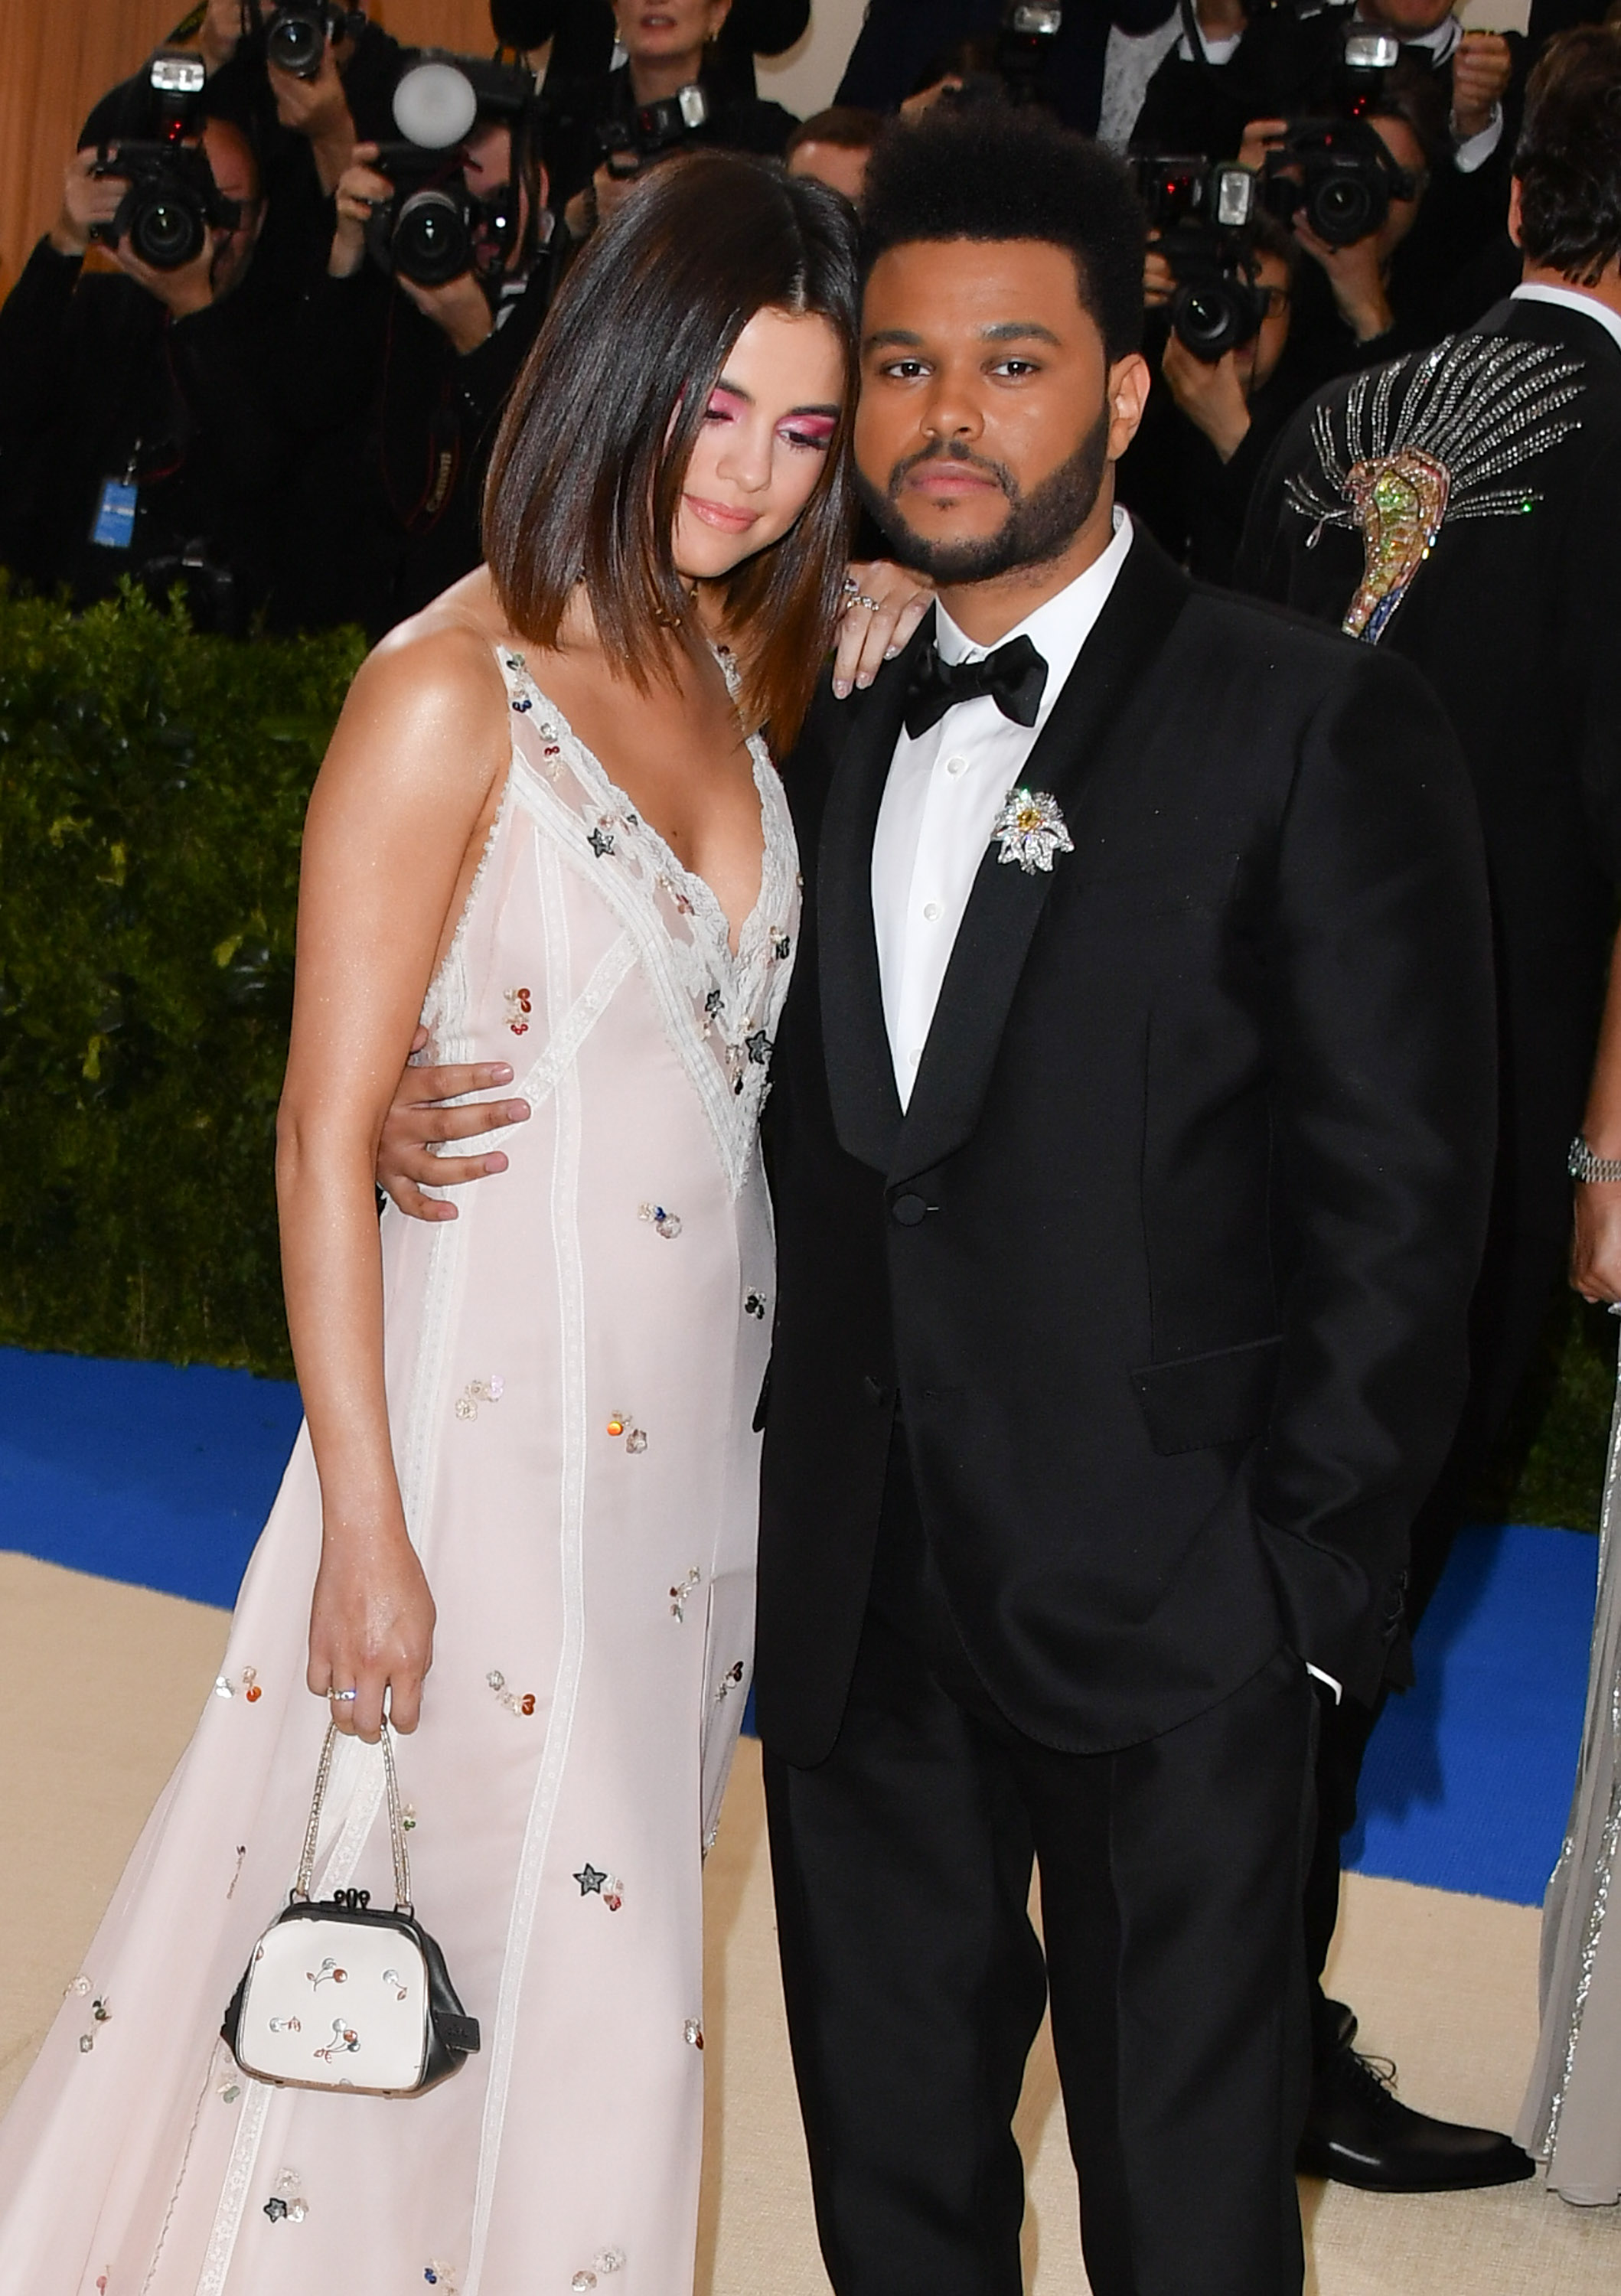 Met Gala 2017: Selena Gomez and the Weeknd Make Their Red Carpet